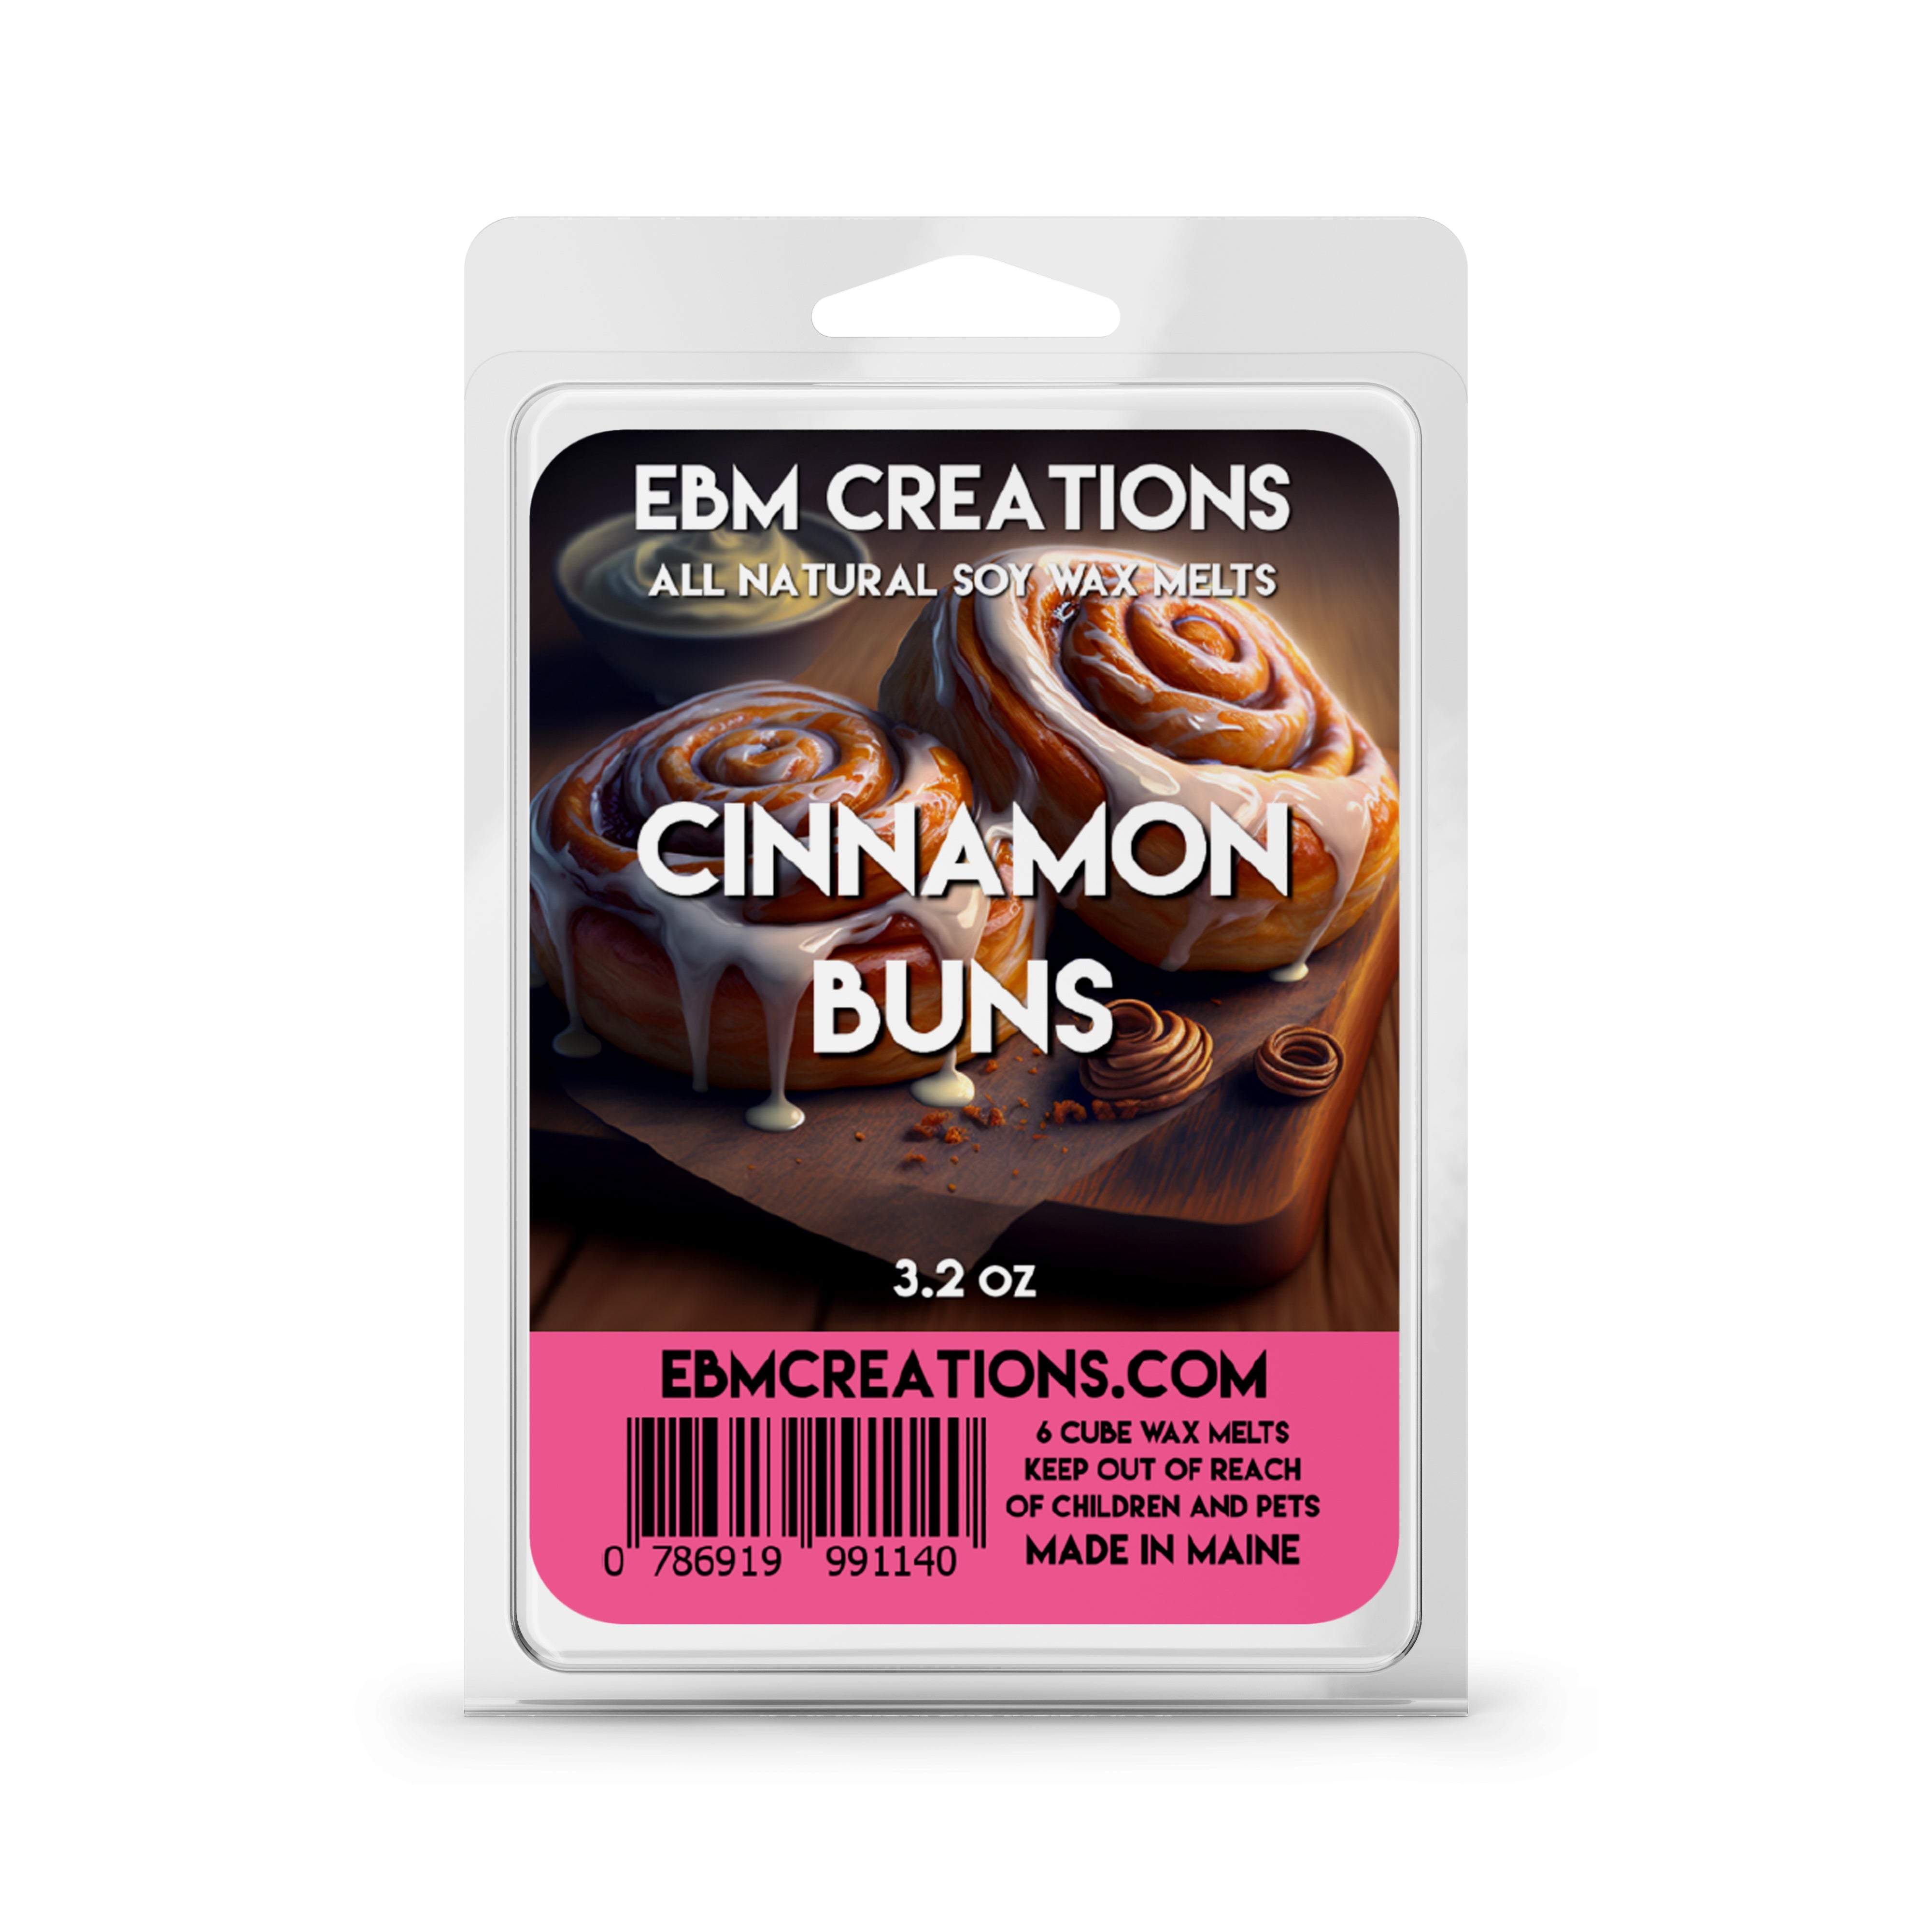 Cinnamon Buns - 3.2 oz Clamshell